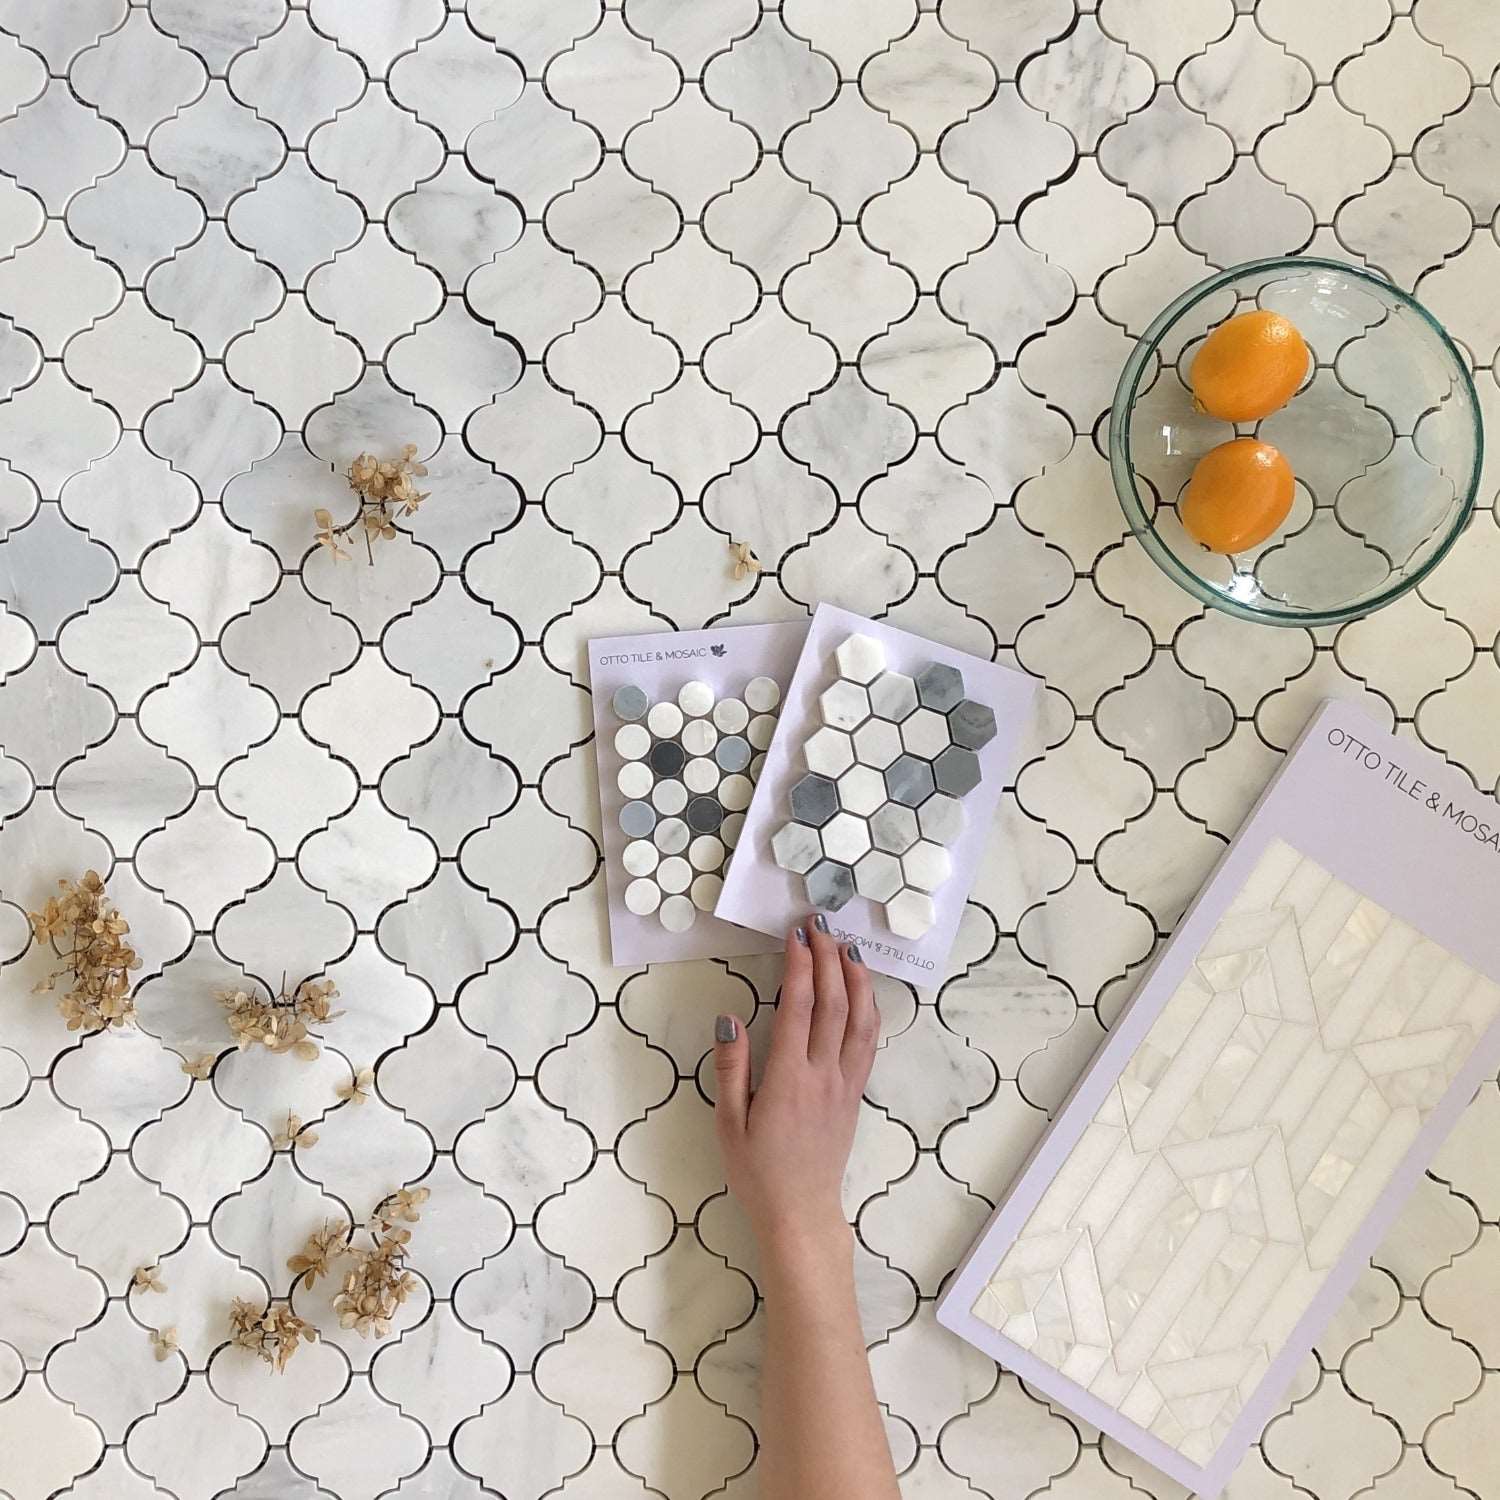 Arabesque Tile Arabescato Polished Marble for Kitchen Backsplash| White Marble Mosaic| Bathroom Tile| Shower Floor| Fireplace Tile| Designer Tile All Marble Tiles